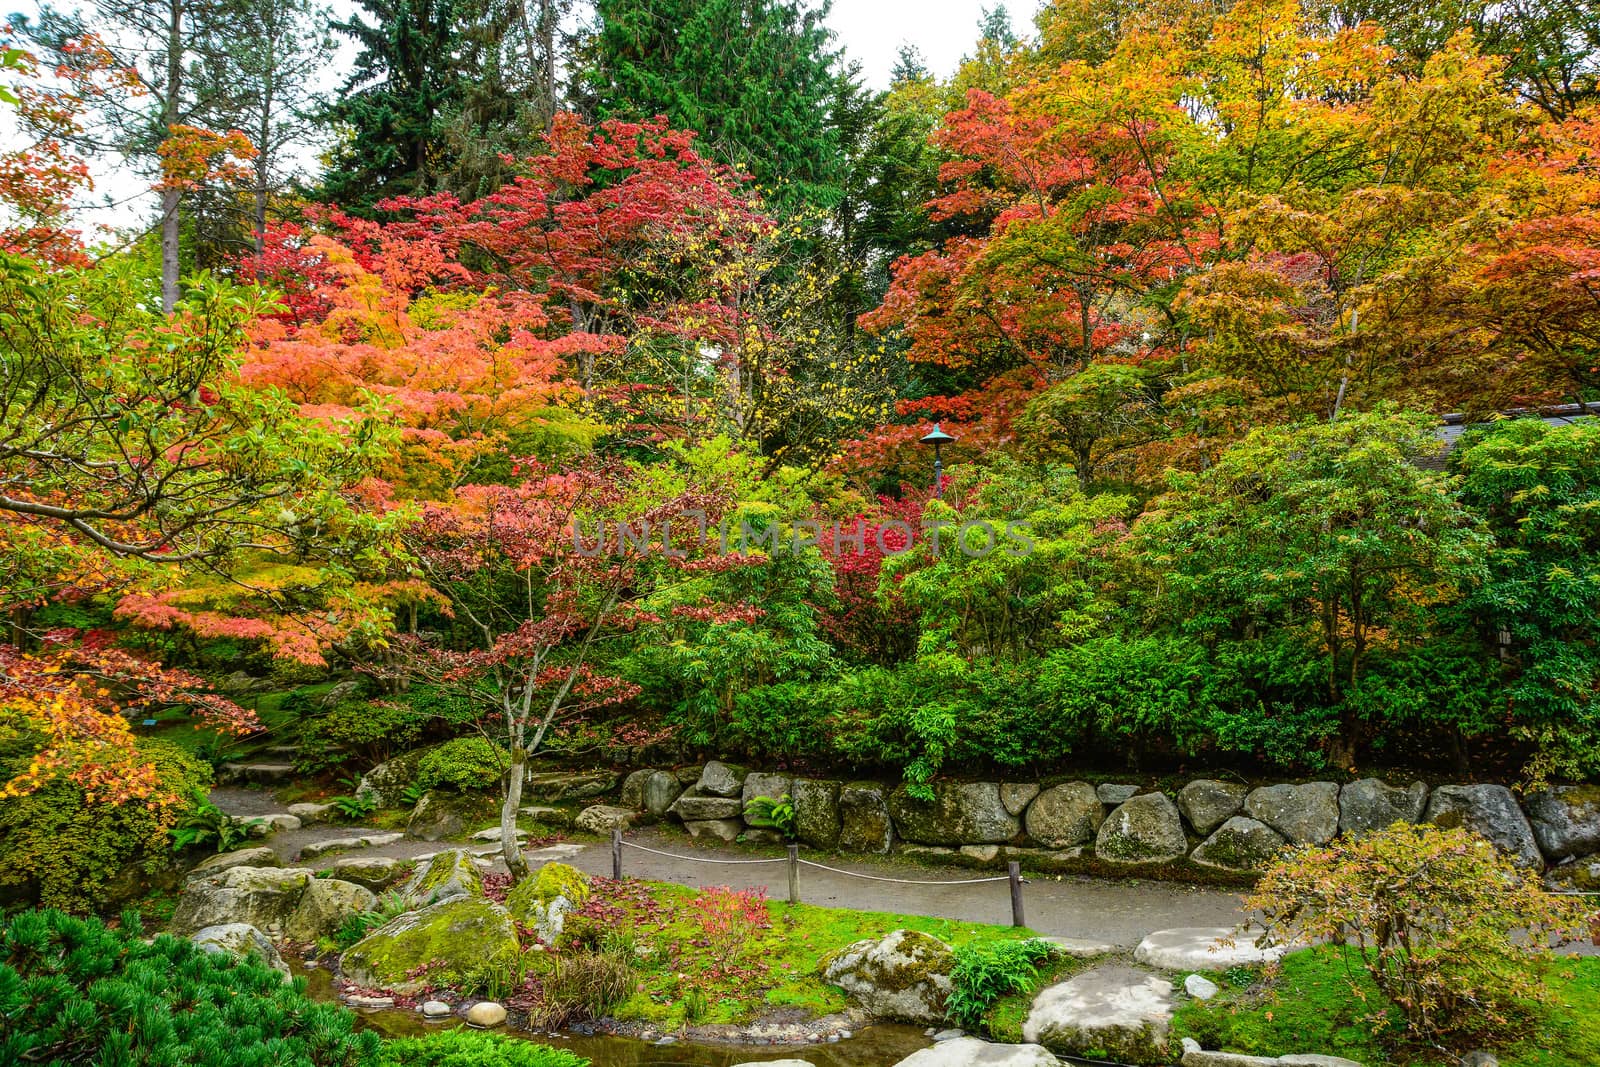 Japanese Garden in Seattle's Washington Park Arboretum by cestes001